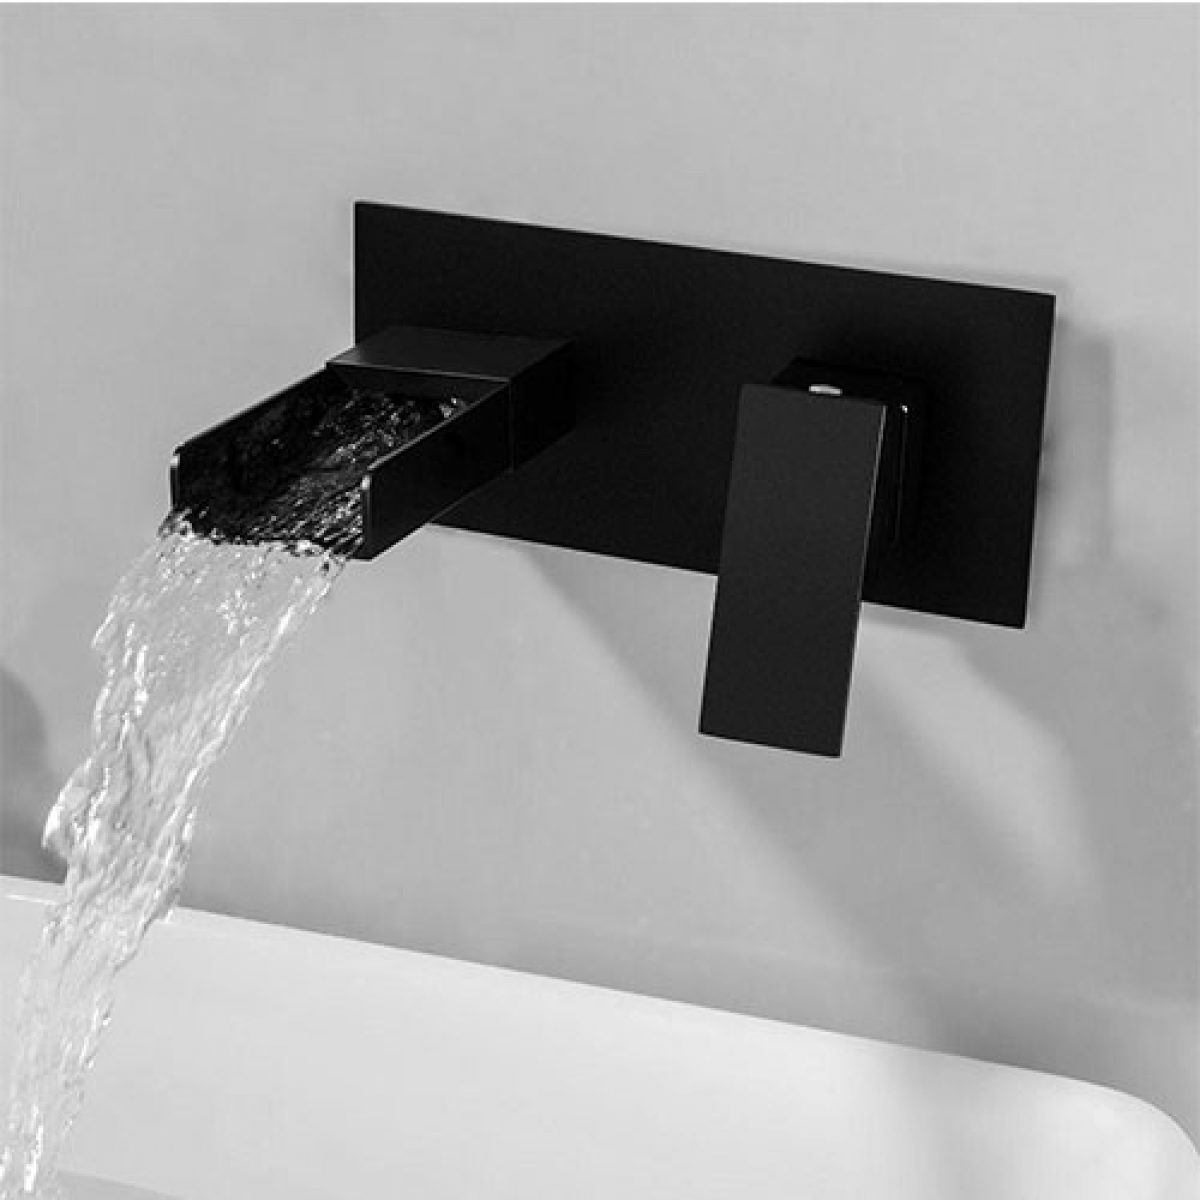  Grifo de lavabo de cascada, grifo de baño de acero inoxidable,  grifo de agua fría y caliente, grifo de cascada de una sola manija para  lavabo de baño, negro (color negro) 